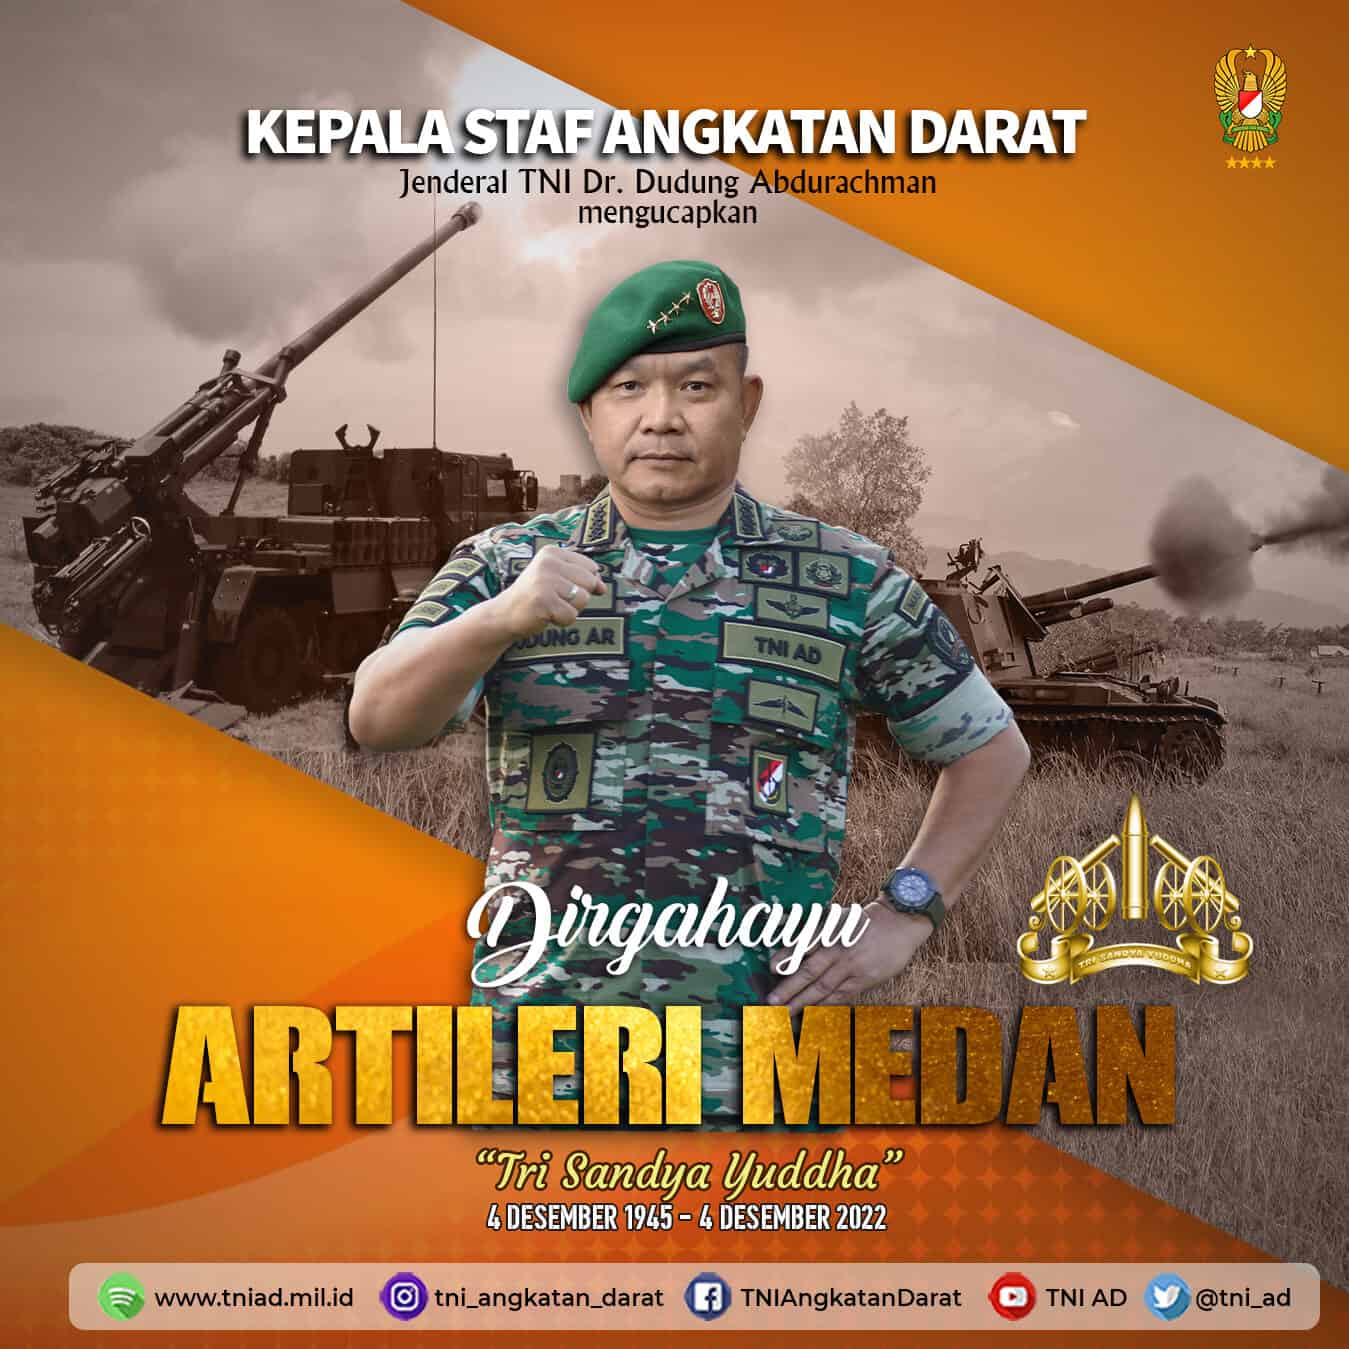 Dirgahayu Artileri Medan, 4 Desember 1945 – 4 Desember 2022 “Tri Sandya Yuddha”